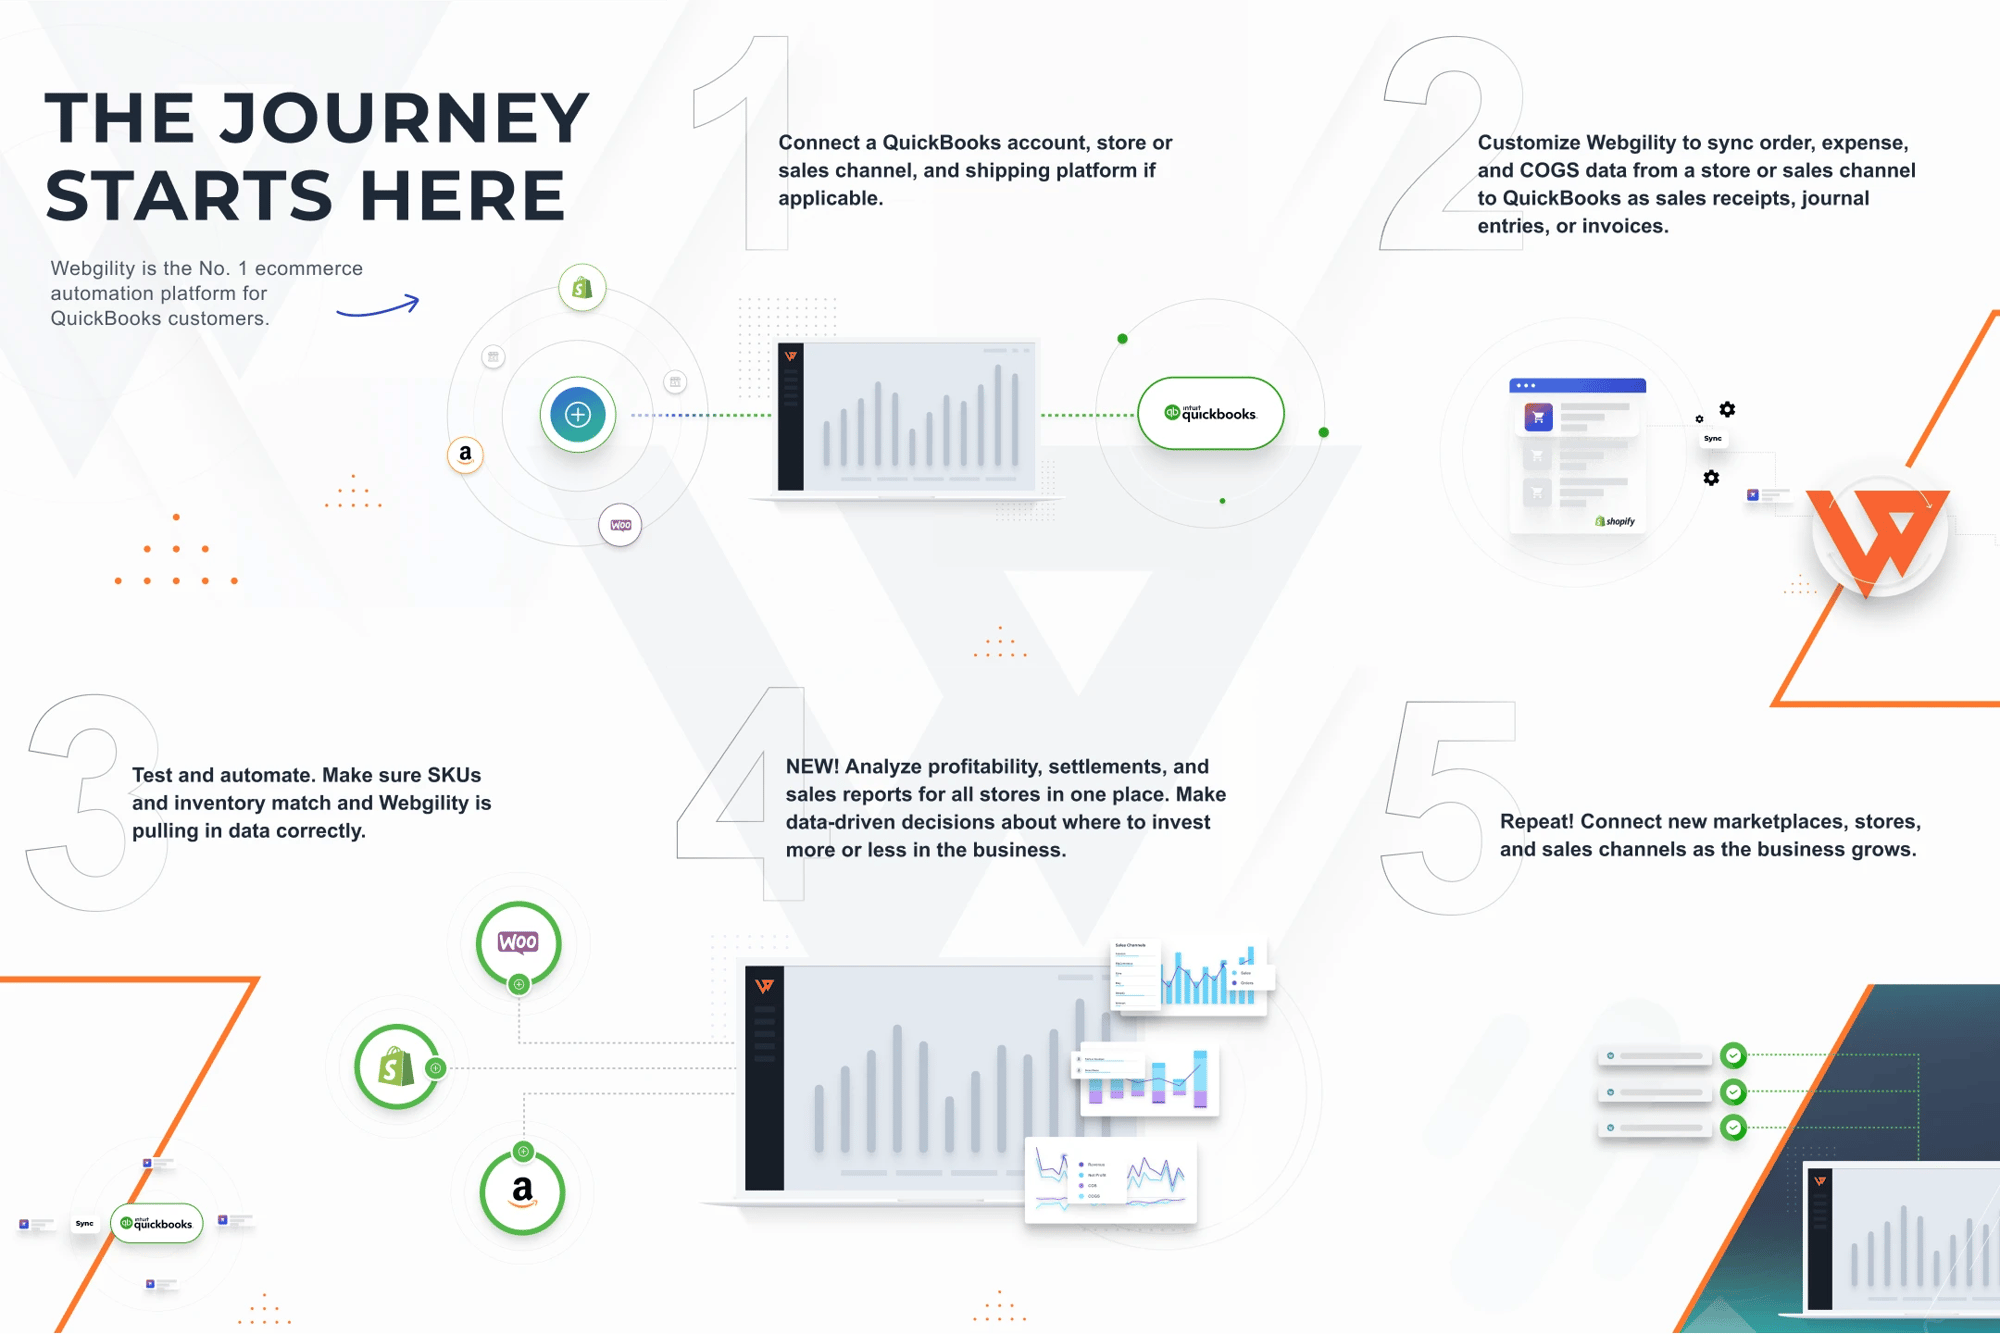 5 steps illustrating the Webgility journey and setup process.